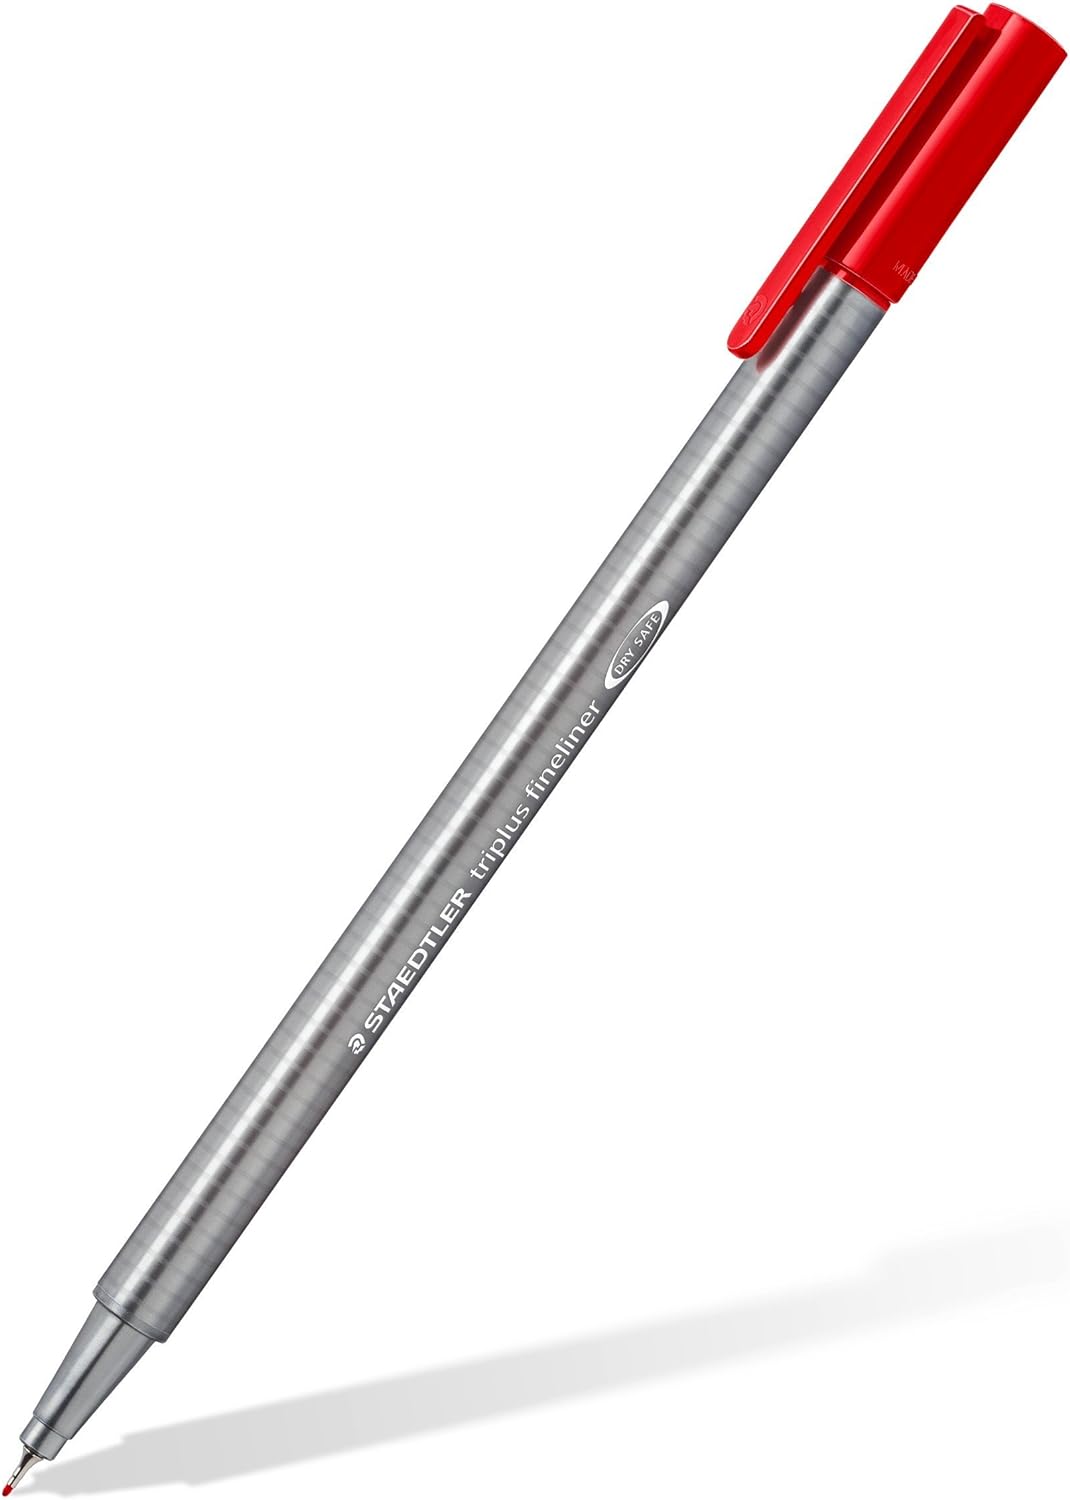 STAEDTLER Triplus Fineliner Pen,0.3mm,36 Brilliant Colours